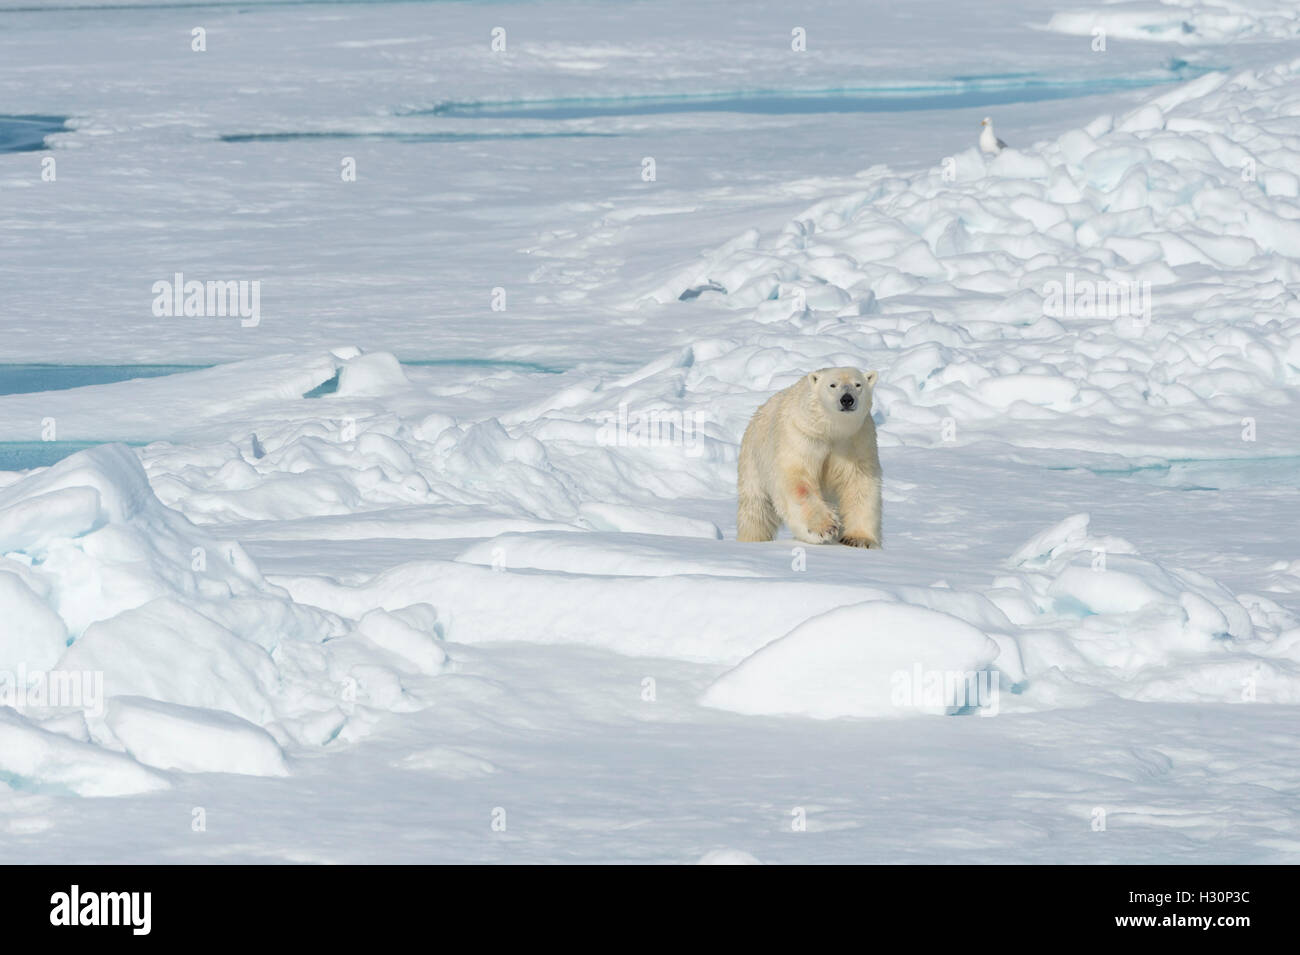 Male Polar Bear (Ursus maritimus) walking over pack ice, Spitsbergen Island, Svalbard archipelago, Norway, Europe Stock Photo